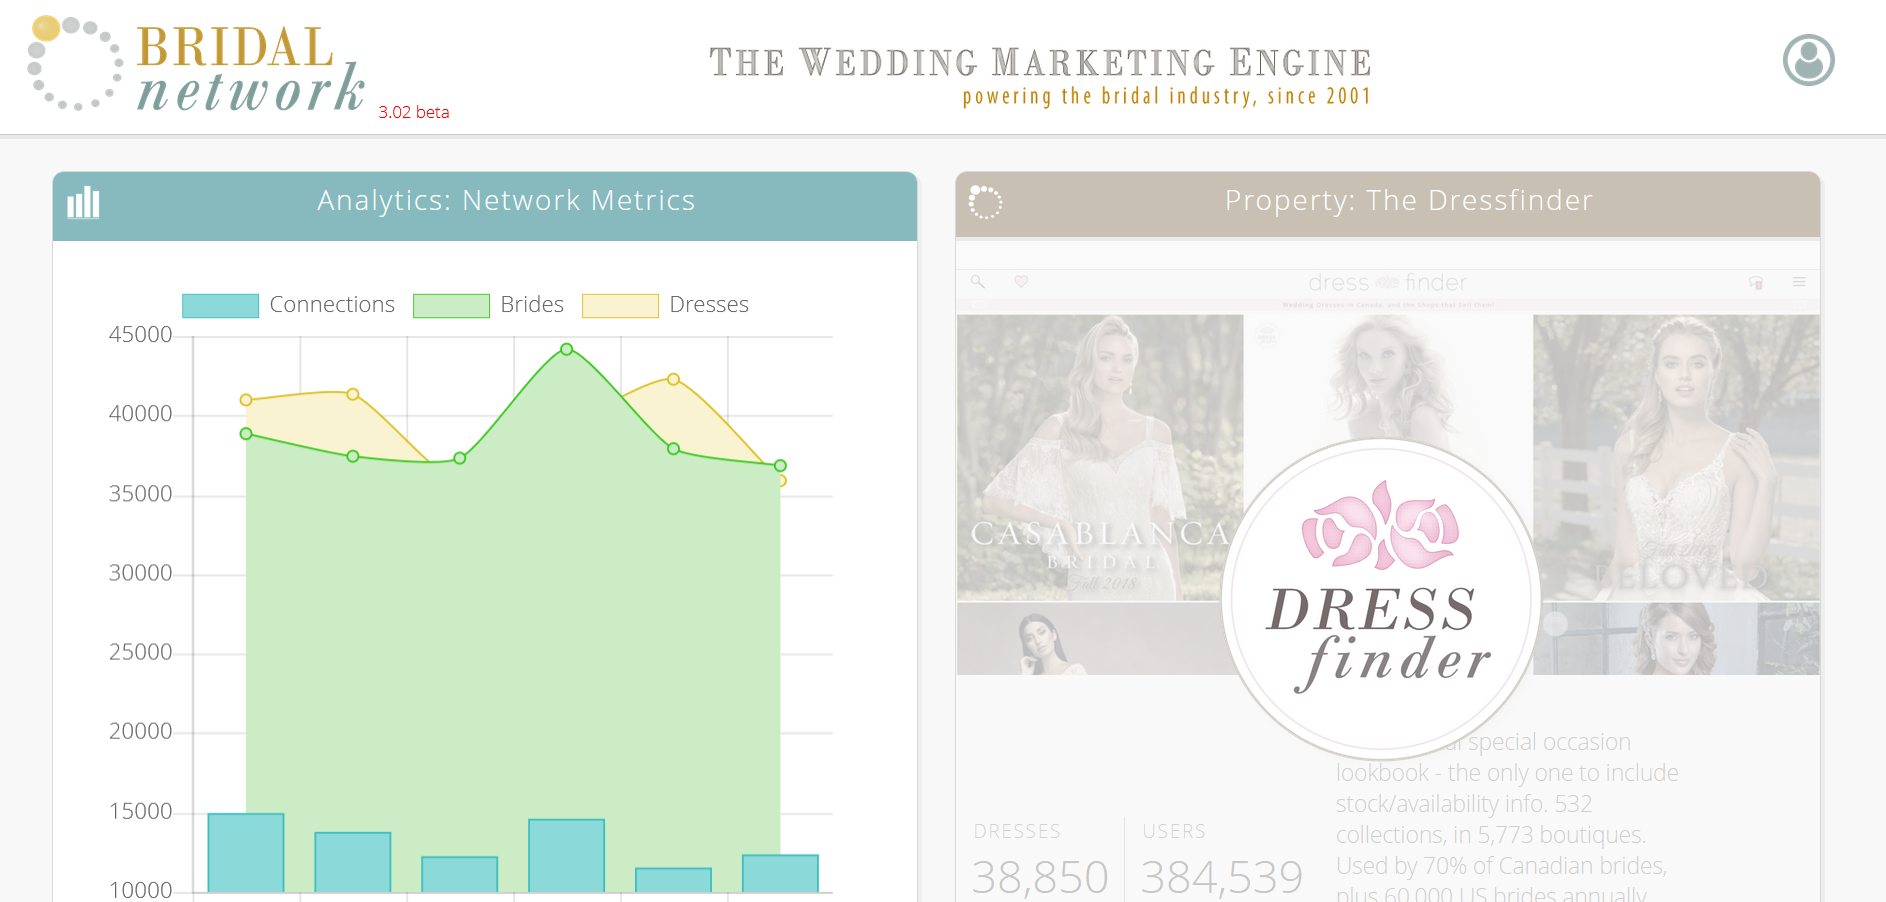 Bridal Network: The Wedding Marketing Engine